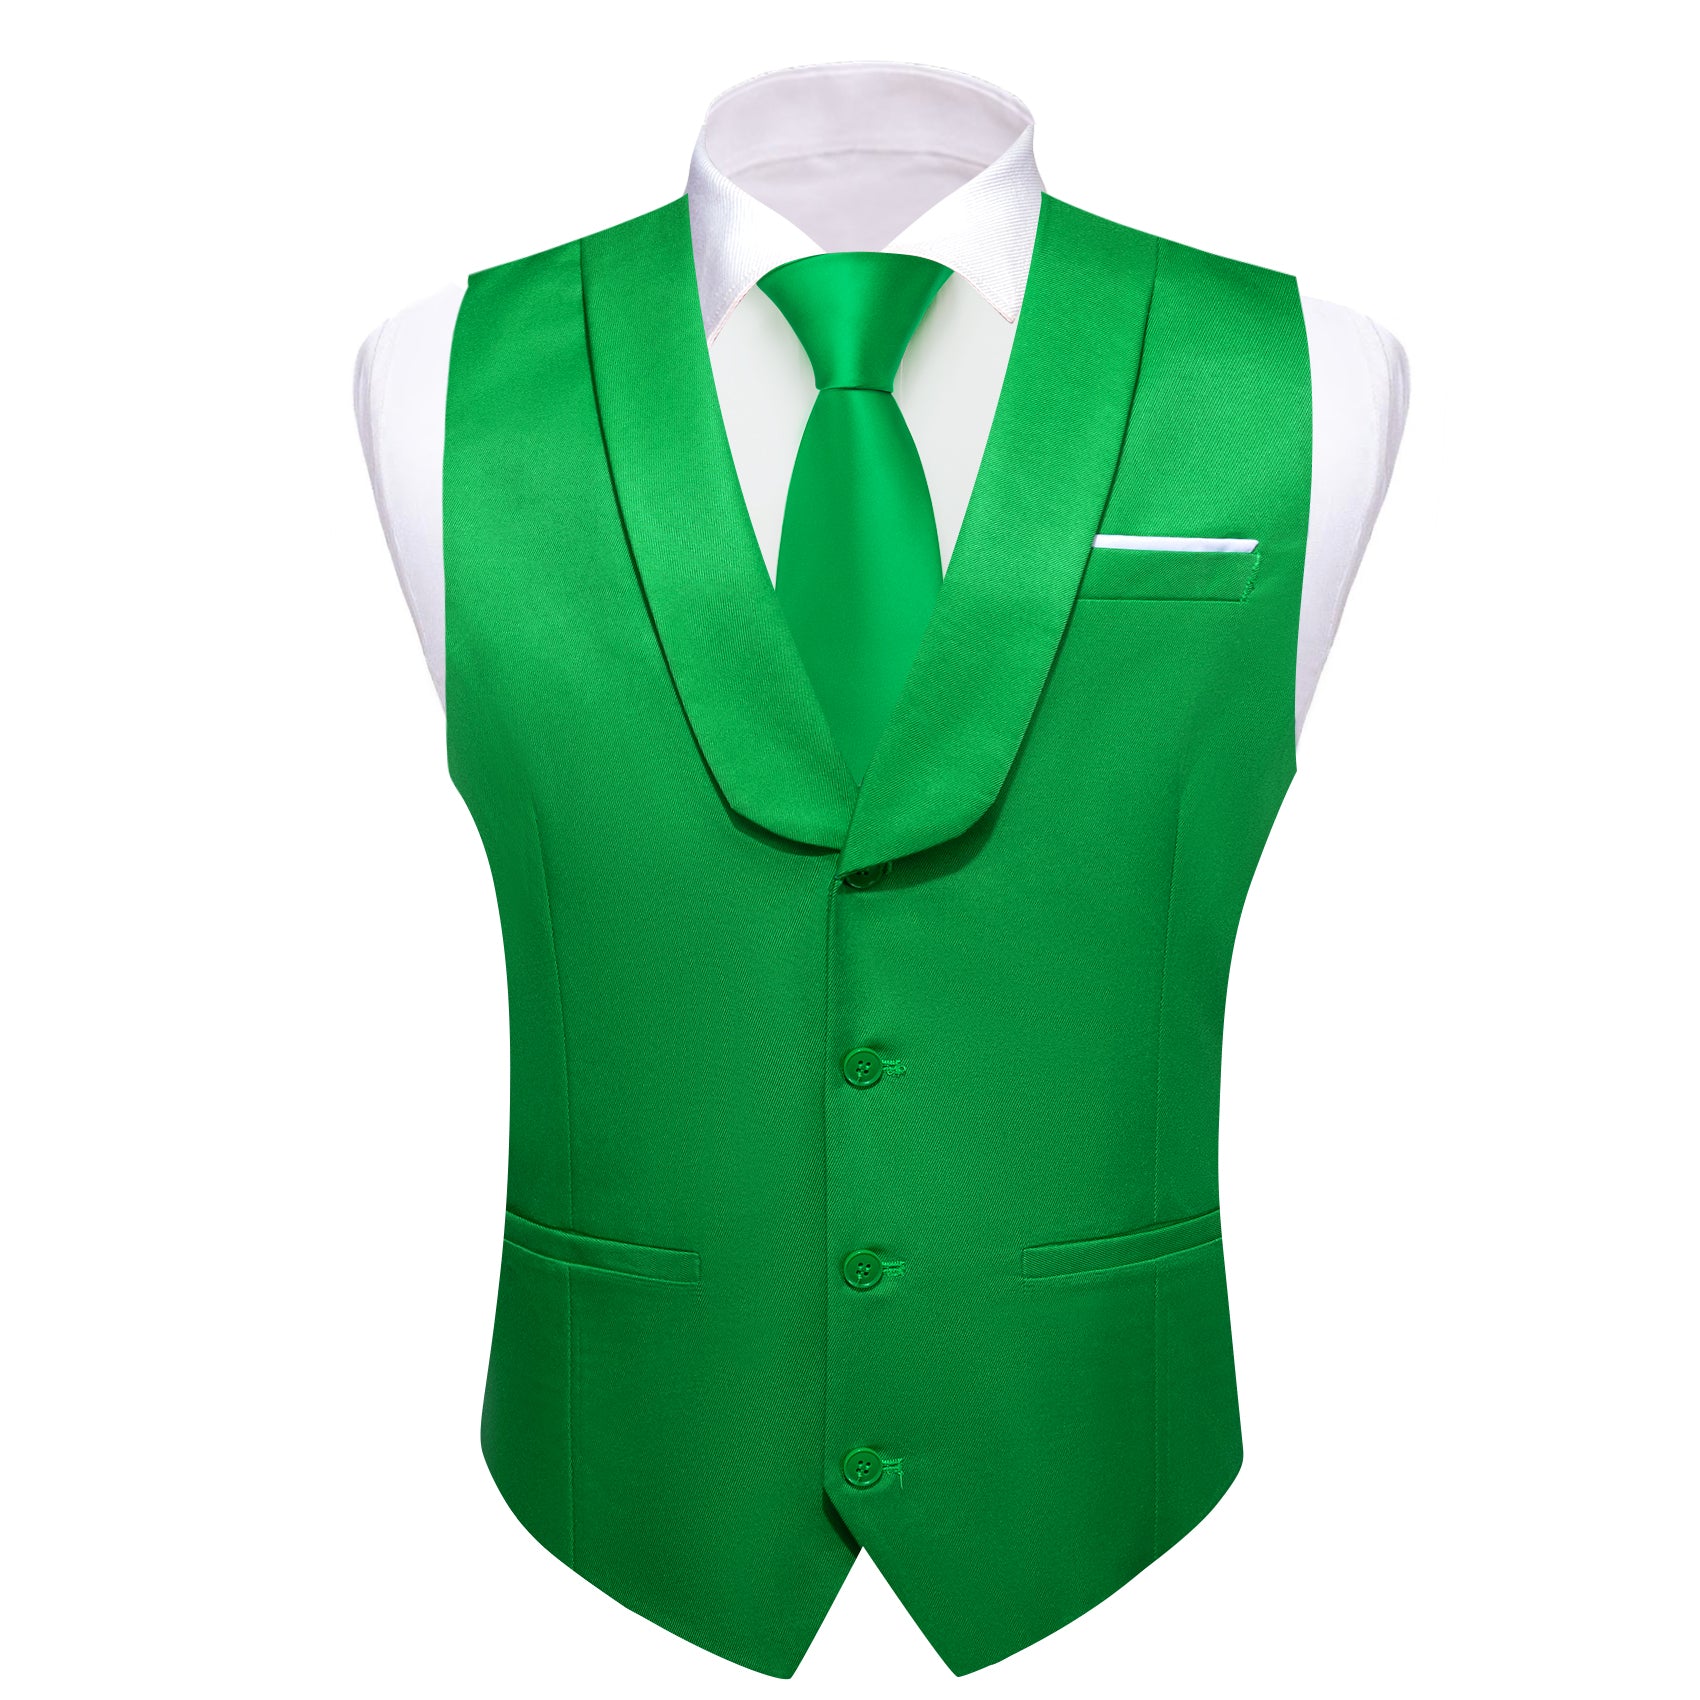 Barry.wang Novetly Light Green Solid Vest Waistcoat Set